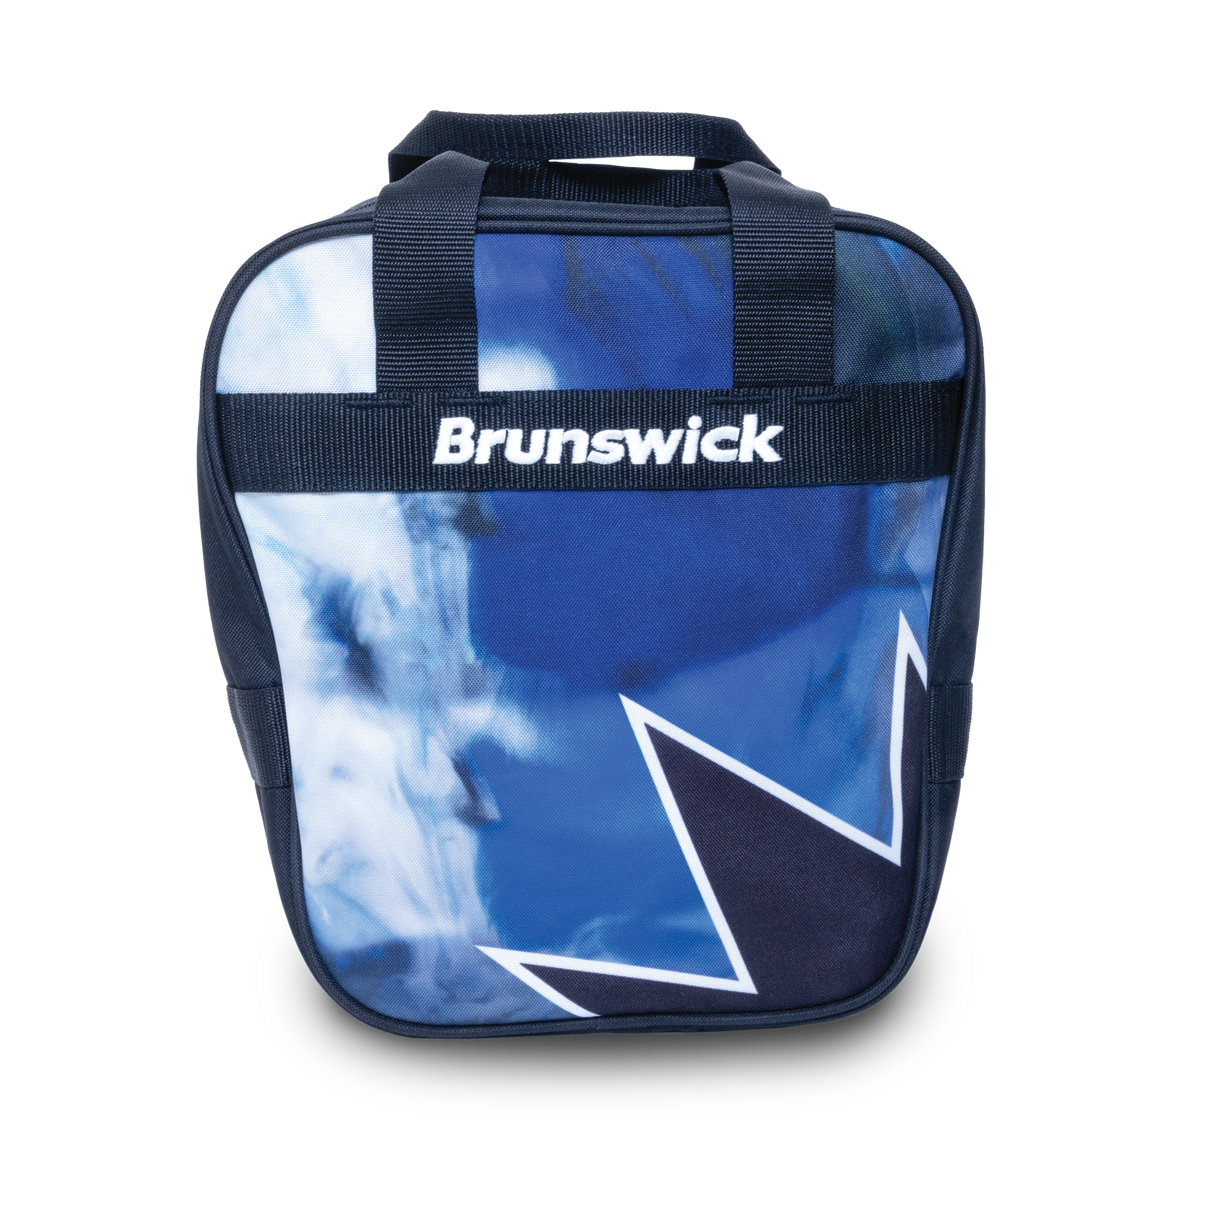 Brunswick Spark 1 Ball Single Tote Indigo Swirl Blue and white Bowling Bag travel suitcase league tournament play sale discount coupon online pba tour